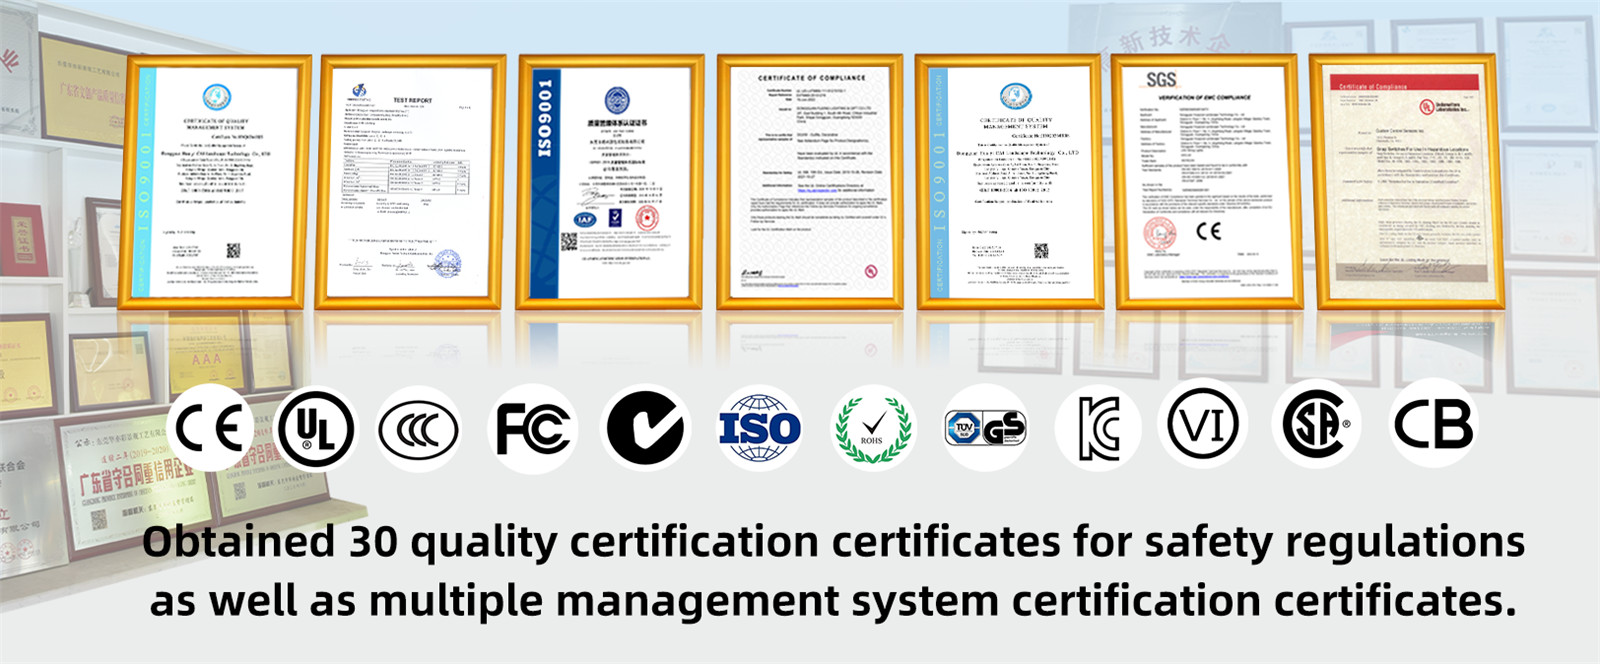 Добијено 30 сертификата квалитета за безбедносне прописе као и више сертификата сертификације система менаџмента.